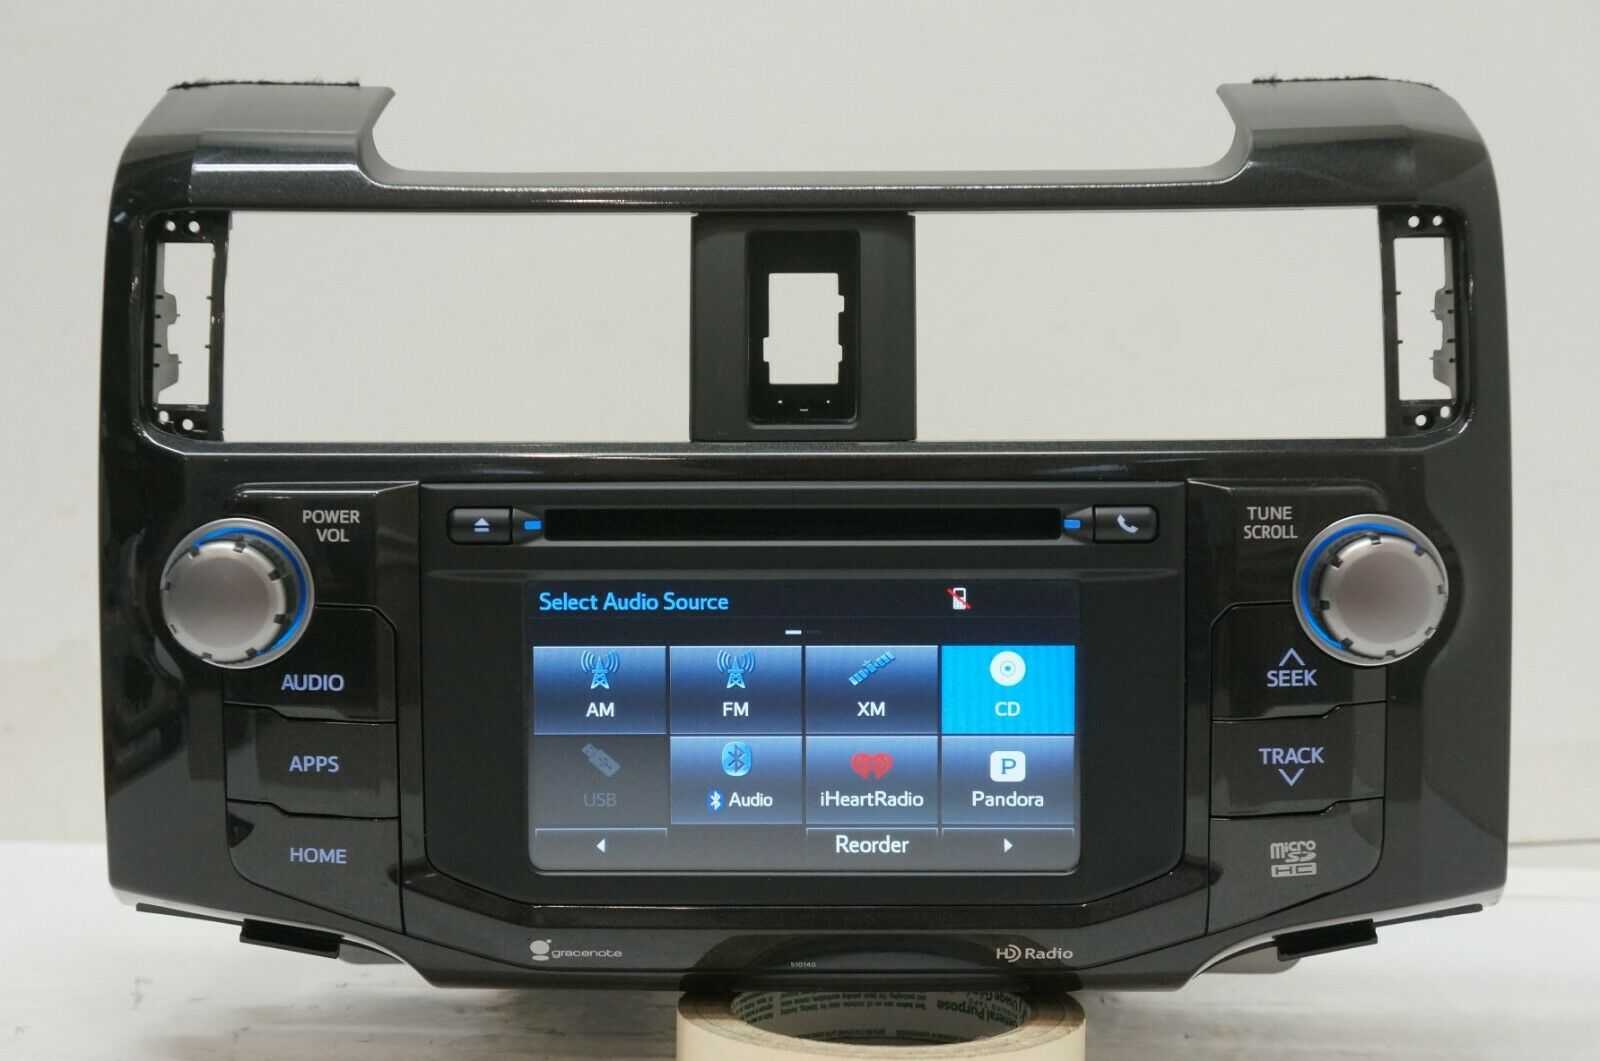 14-19 Toyota 4RUNNER GPS Navigation Touchscreen Radio CD 86100-35360 OEM 510140 Alshned Auto Parts